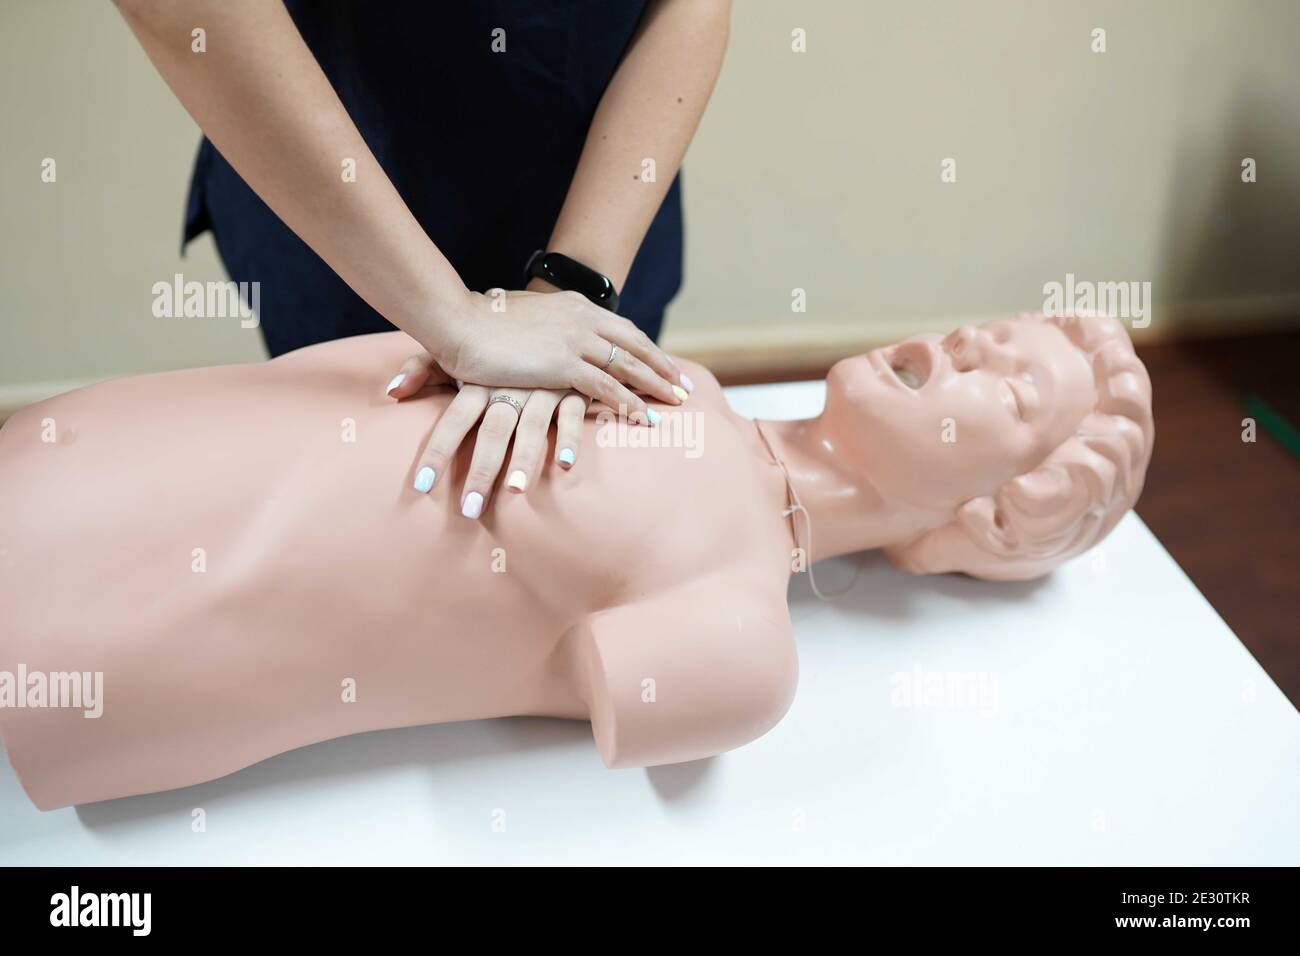 student on a training to do Cardiopulmonary resuscitation Stock Photo